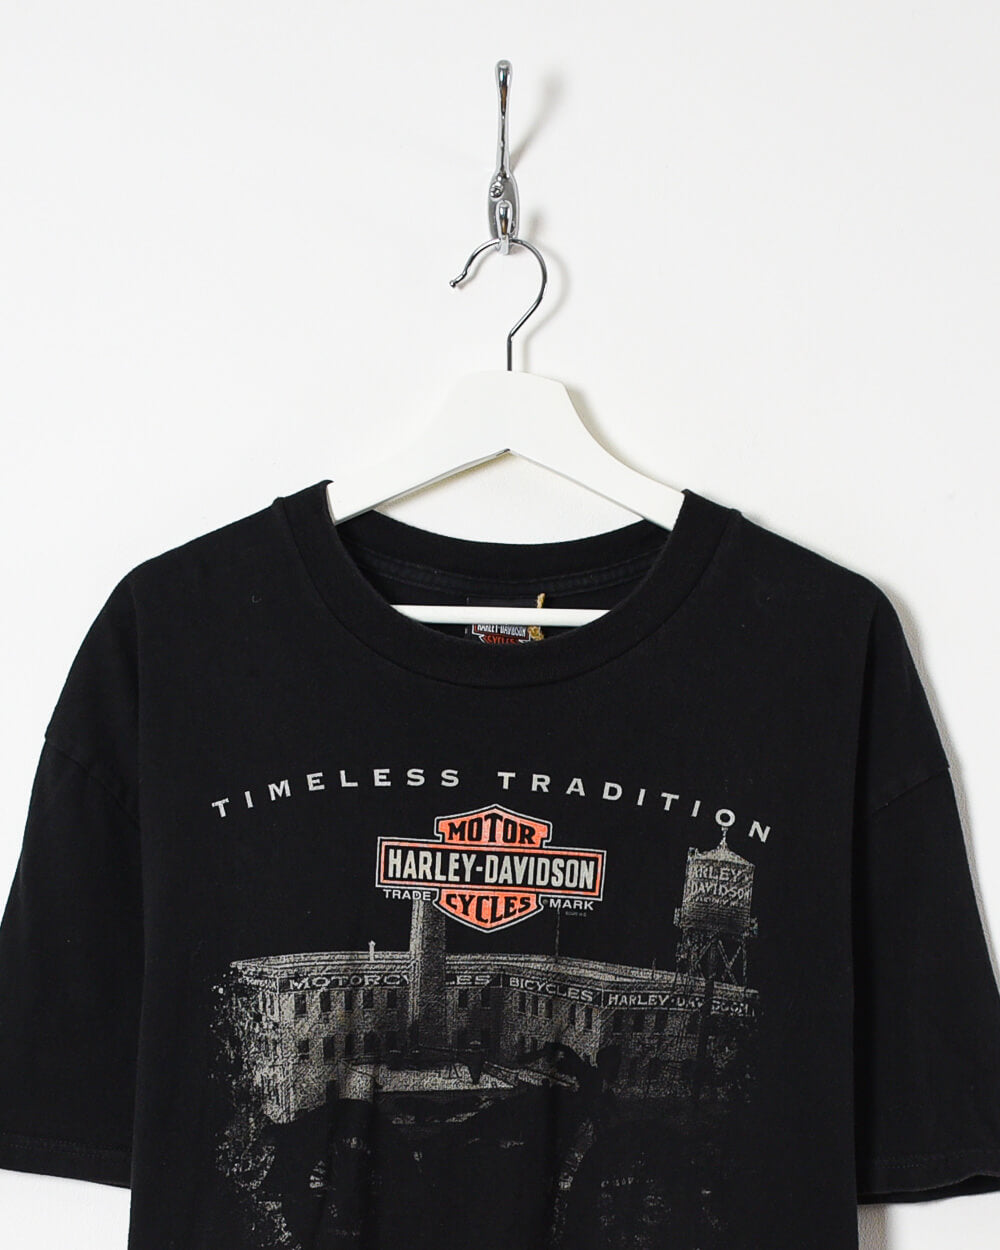 Black Harley Davidson Motorcycles Timeless Tradition T-Shirt - X-Large